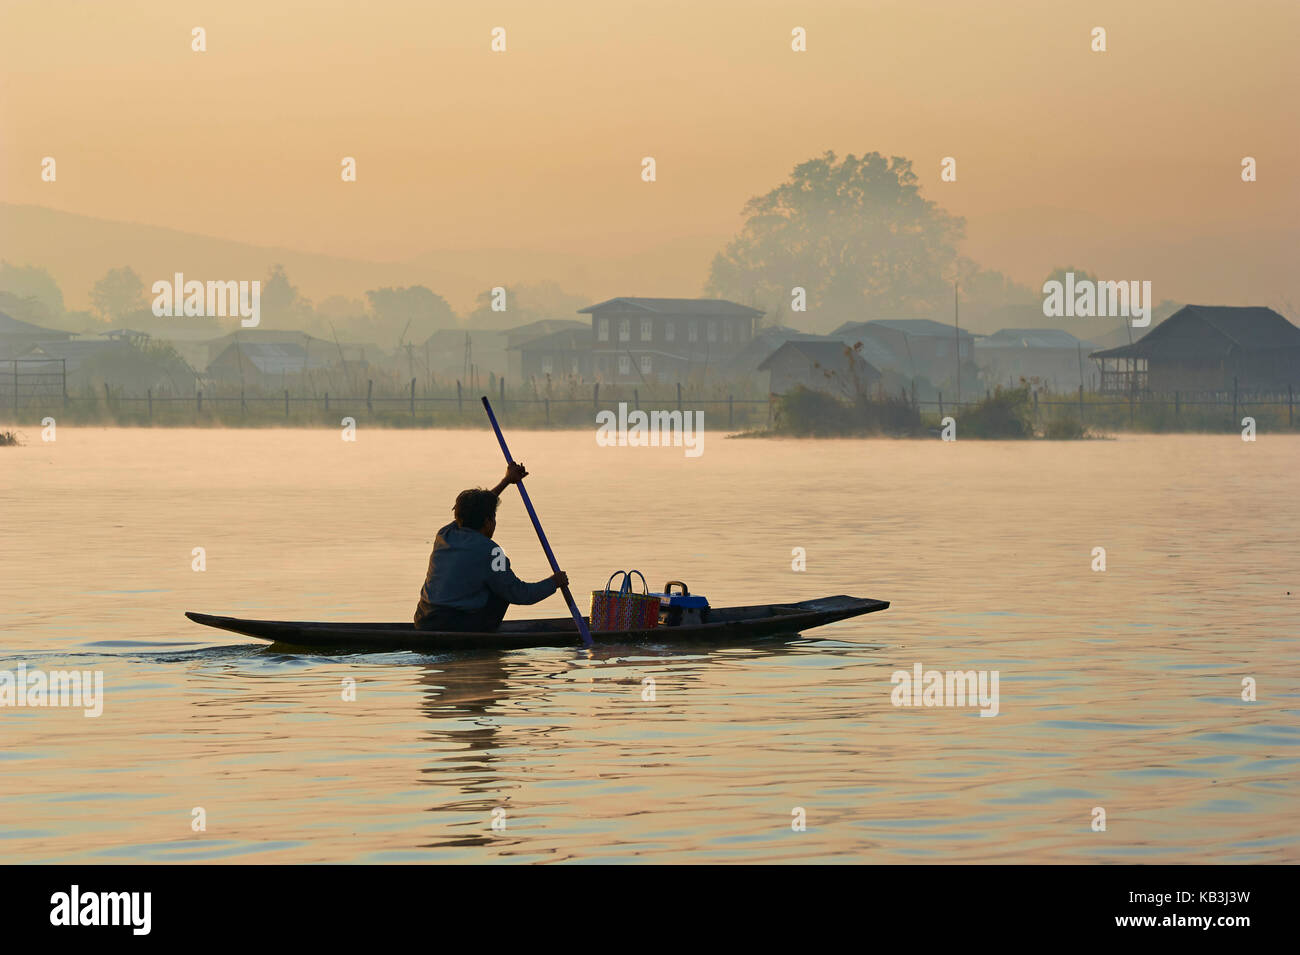 Woman in a fishing boat, Inle lake, Myanmar, Asia, Stock Photo